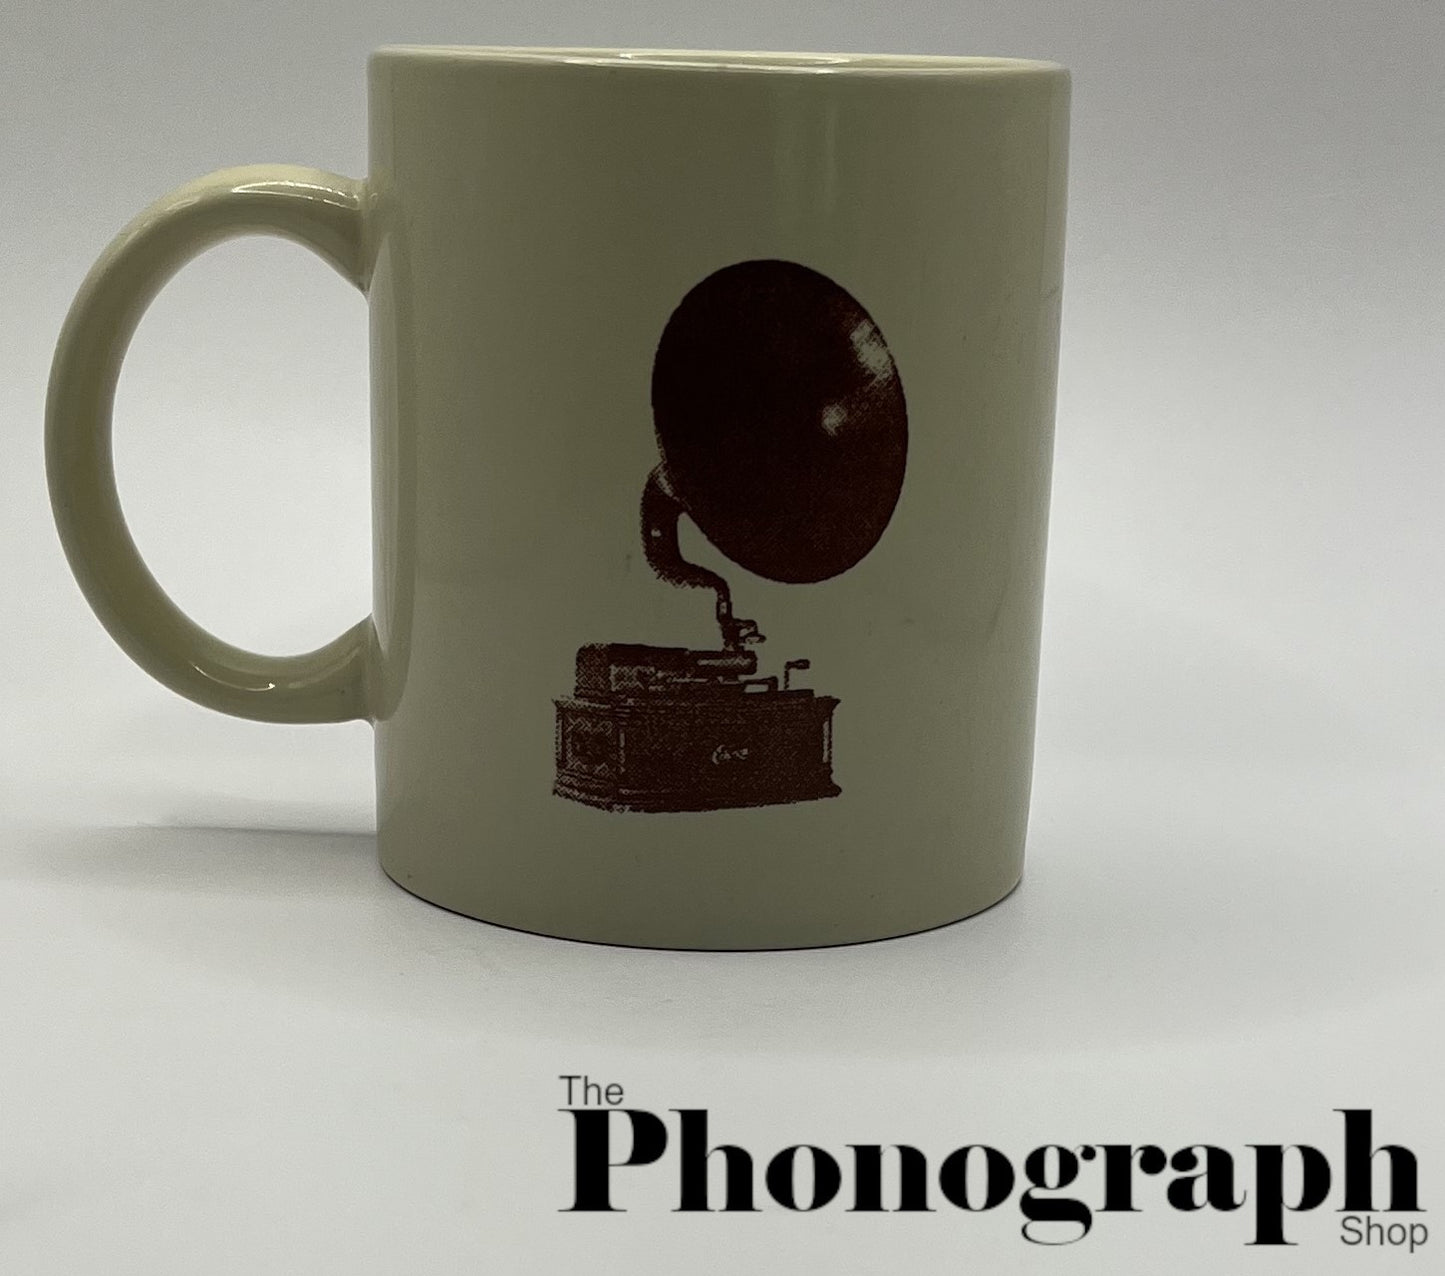 California Antique Phonograph Society (CAPS) Coffee Mug